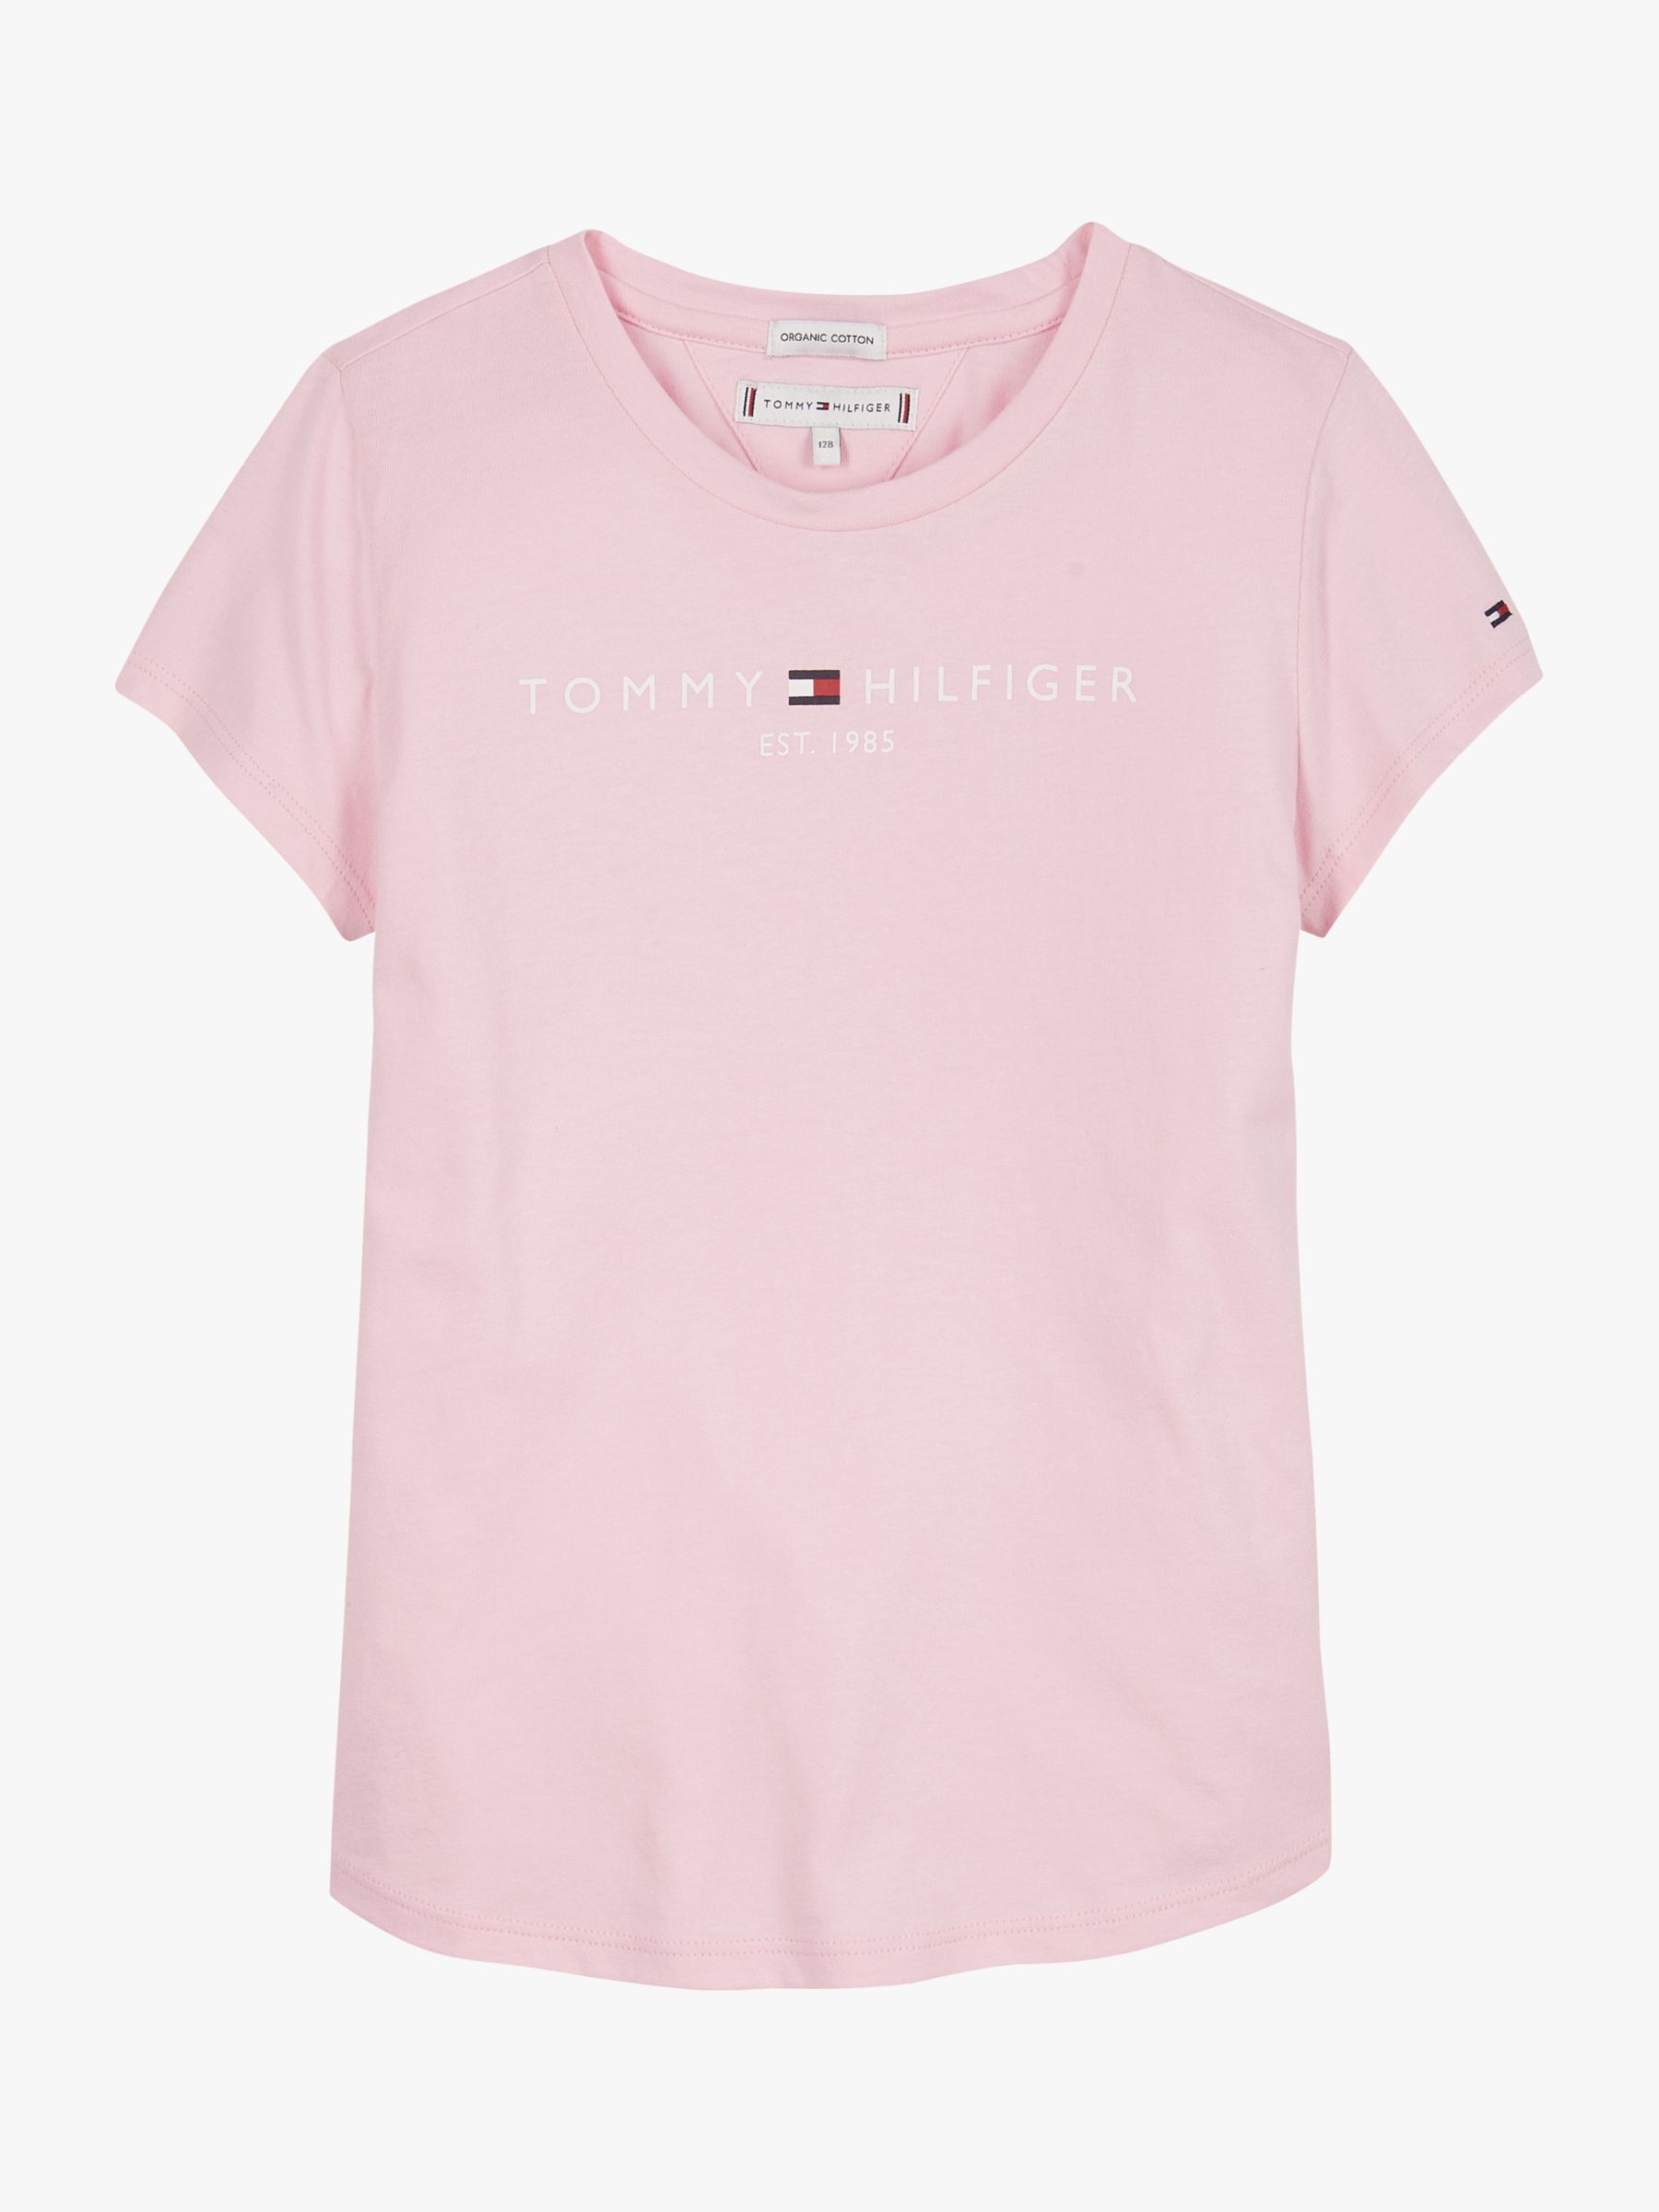 Image of Tommy Hilfiger Boys Essential Logo TShirt Romantic Pink